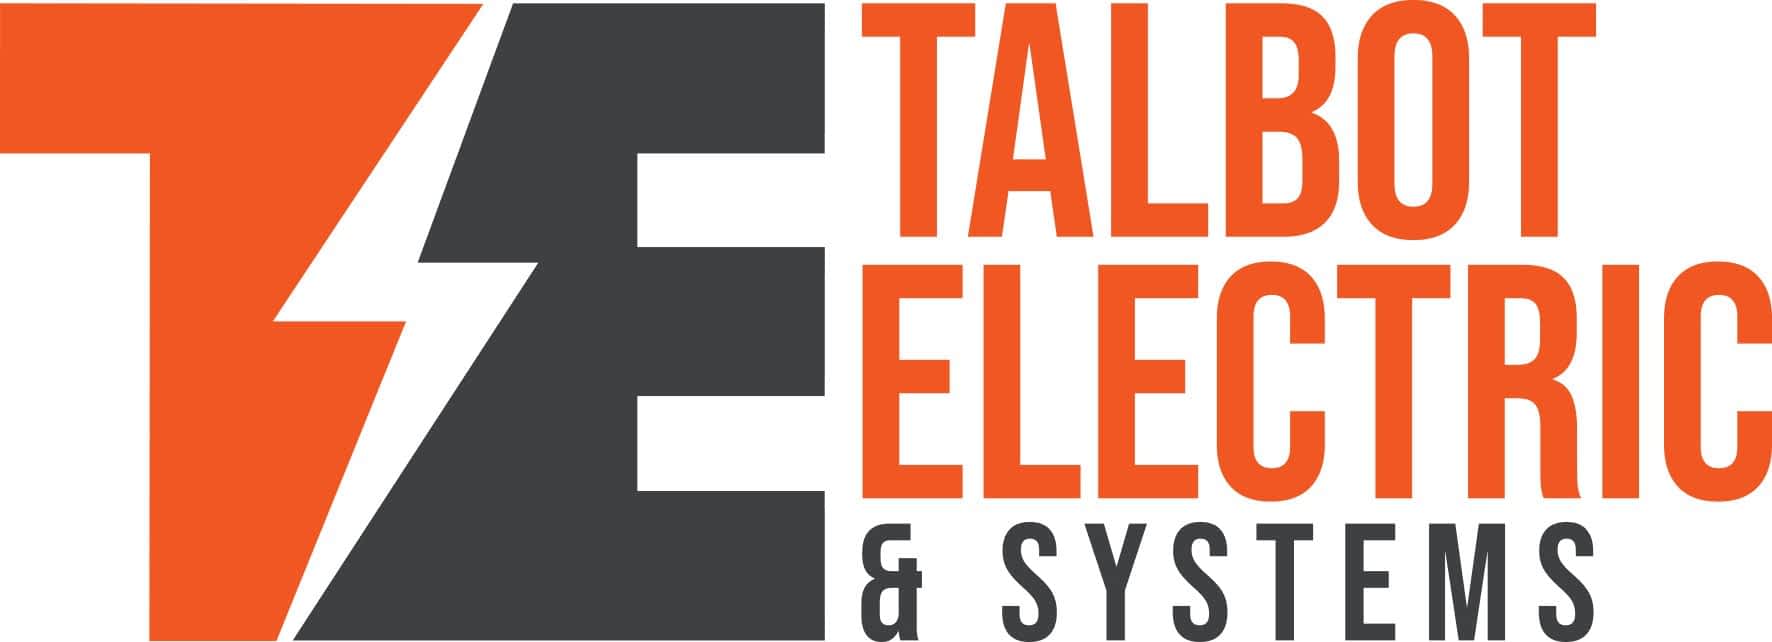 Talbot Electric